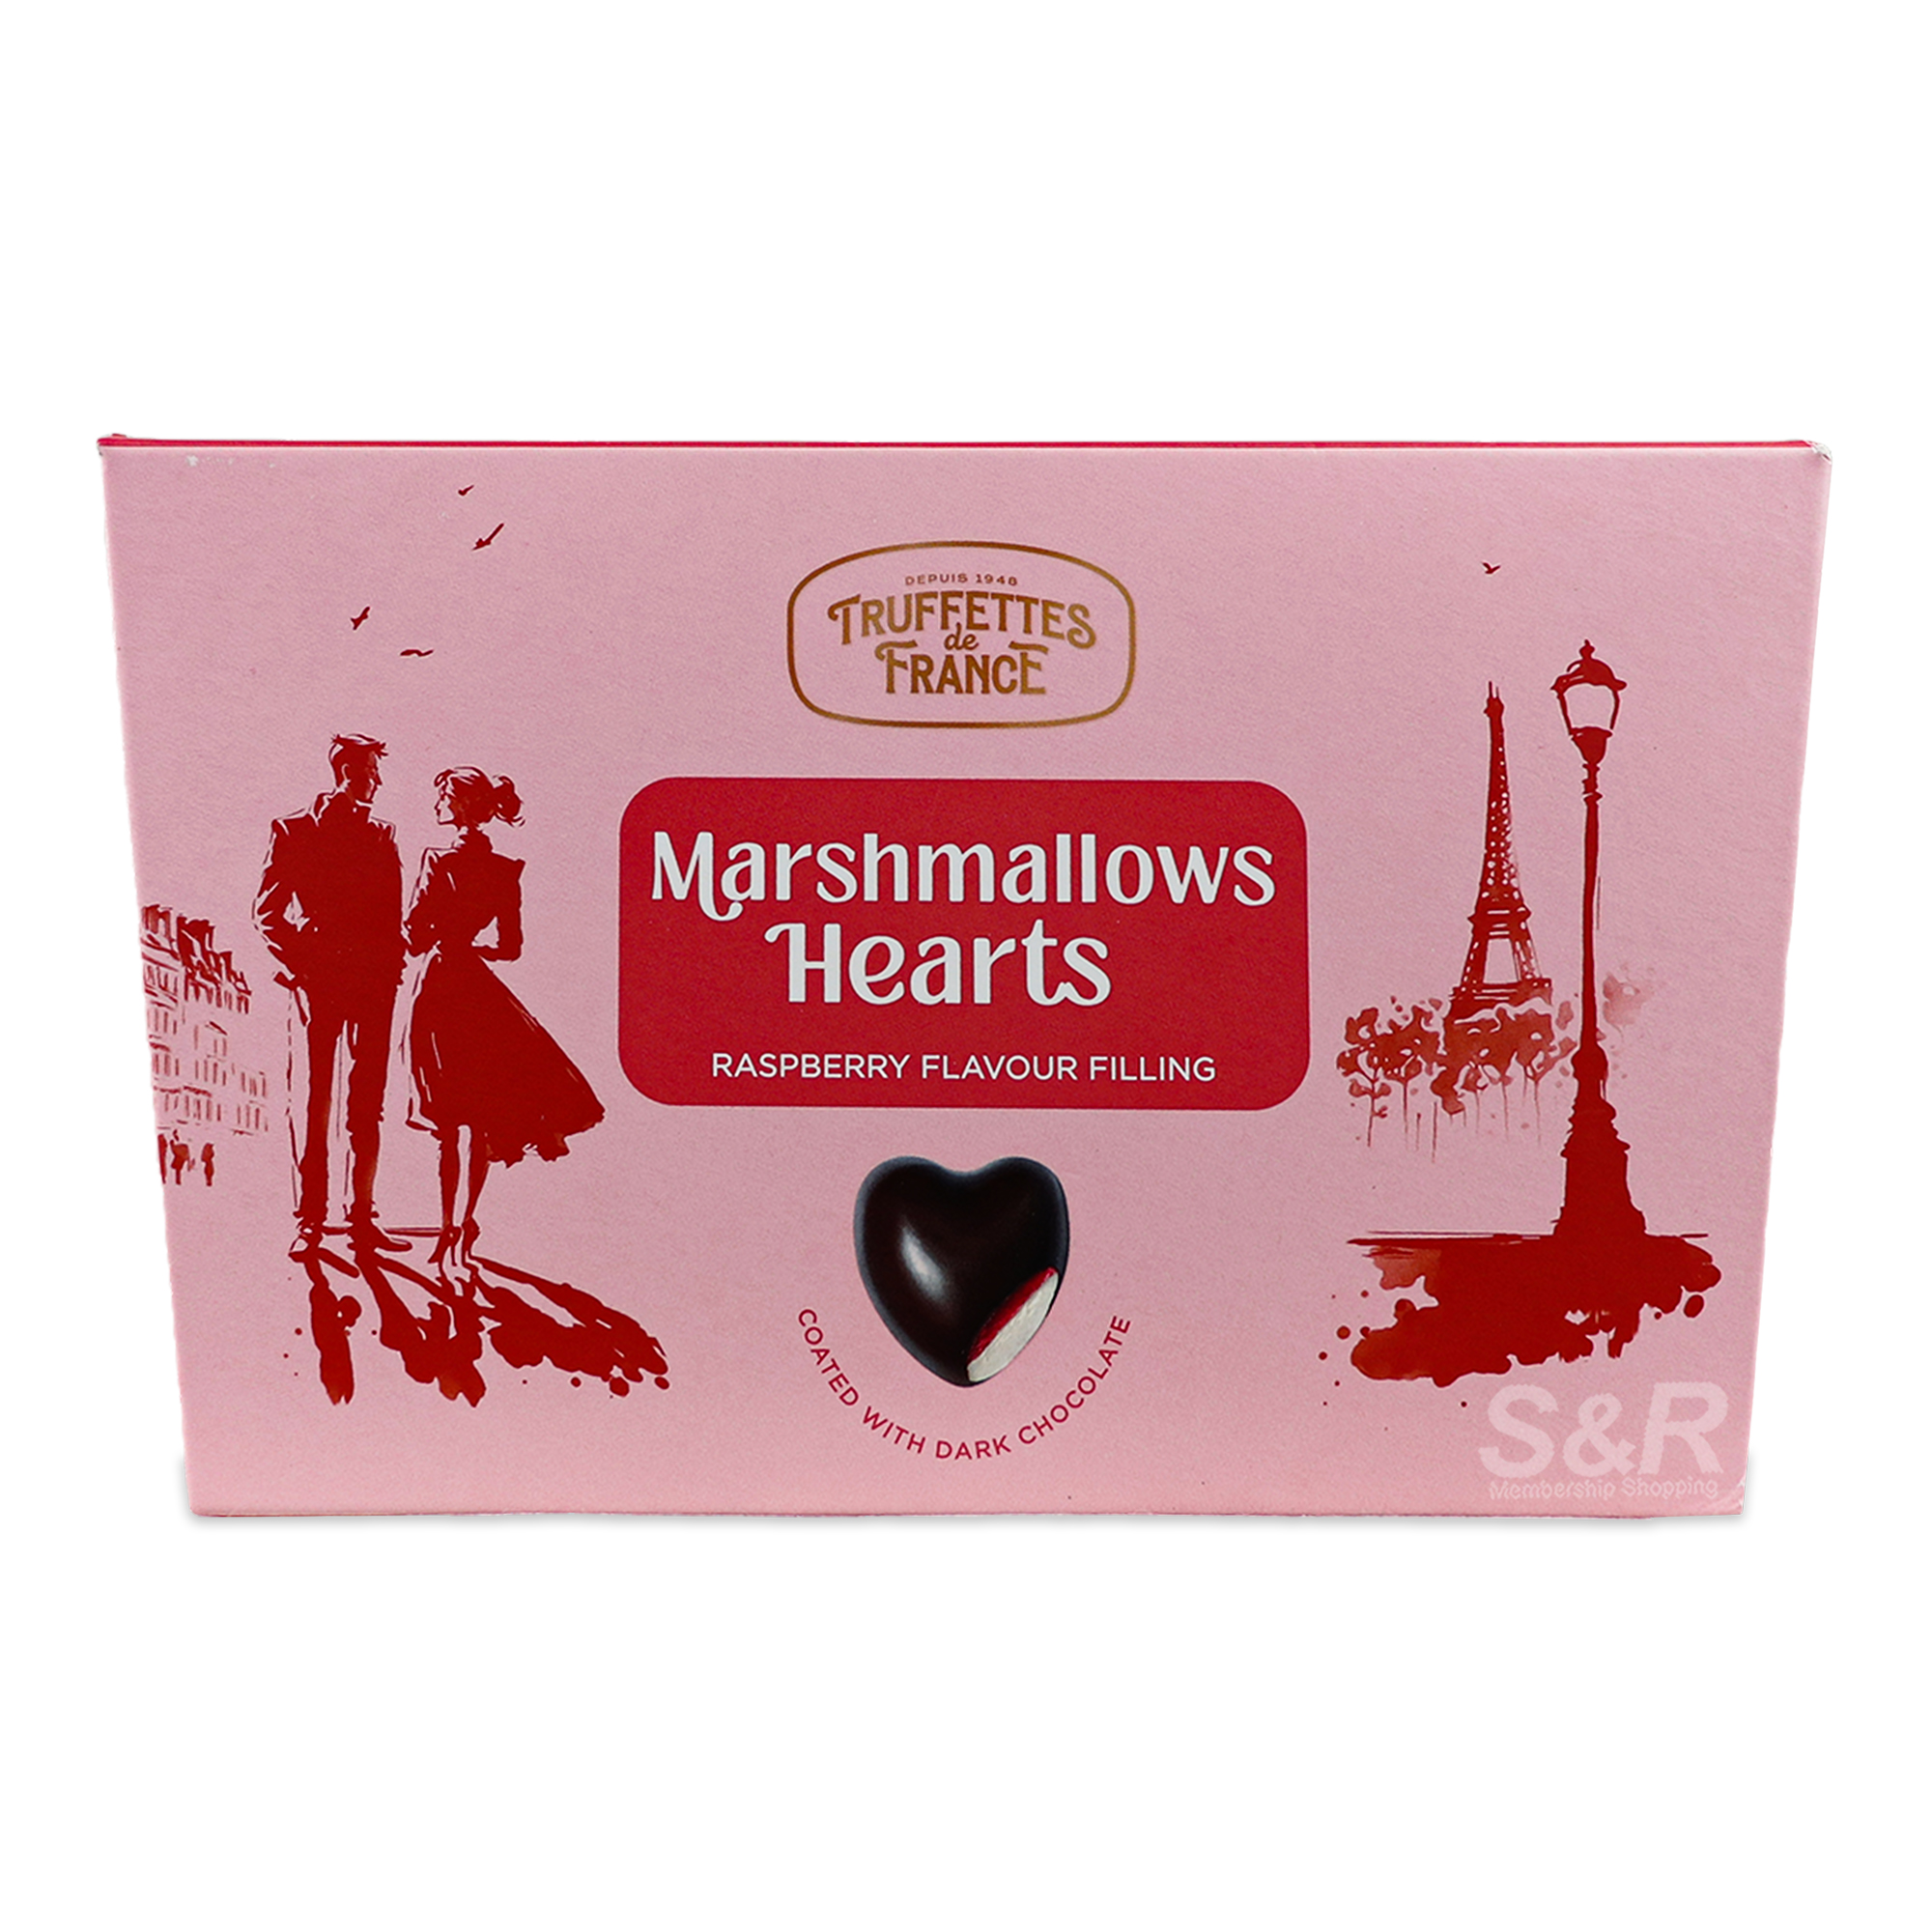 Truffettes de France Marshmallows Hearts 300g